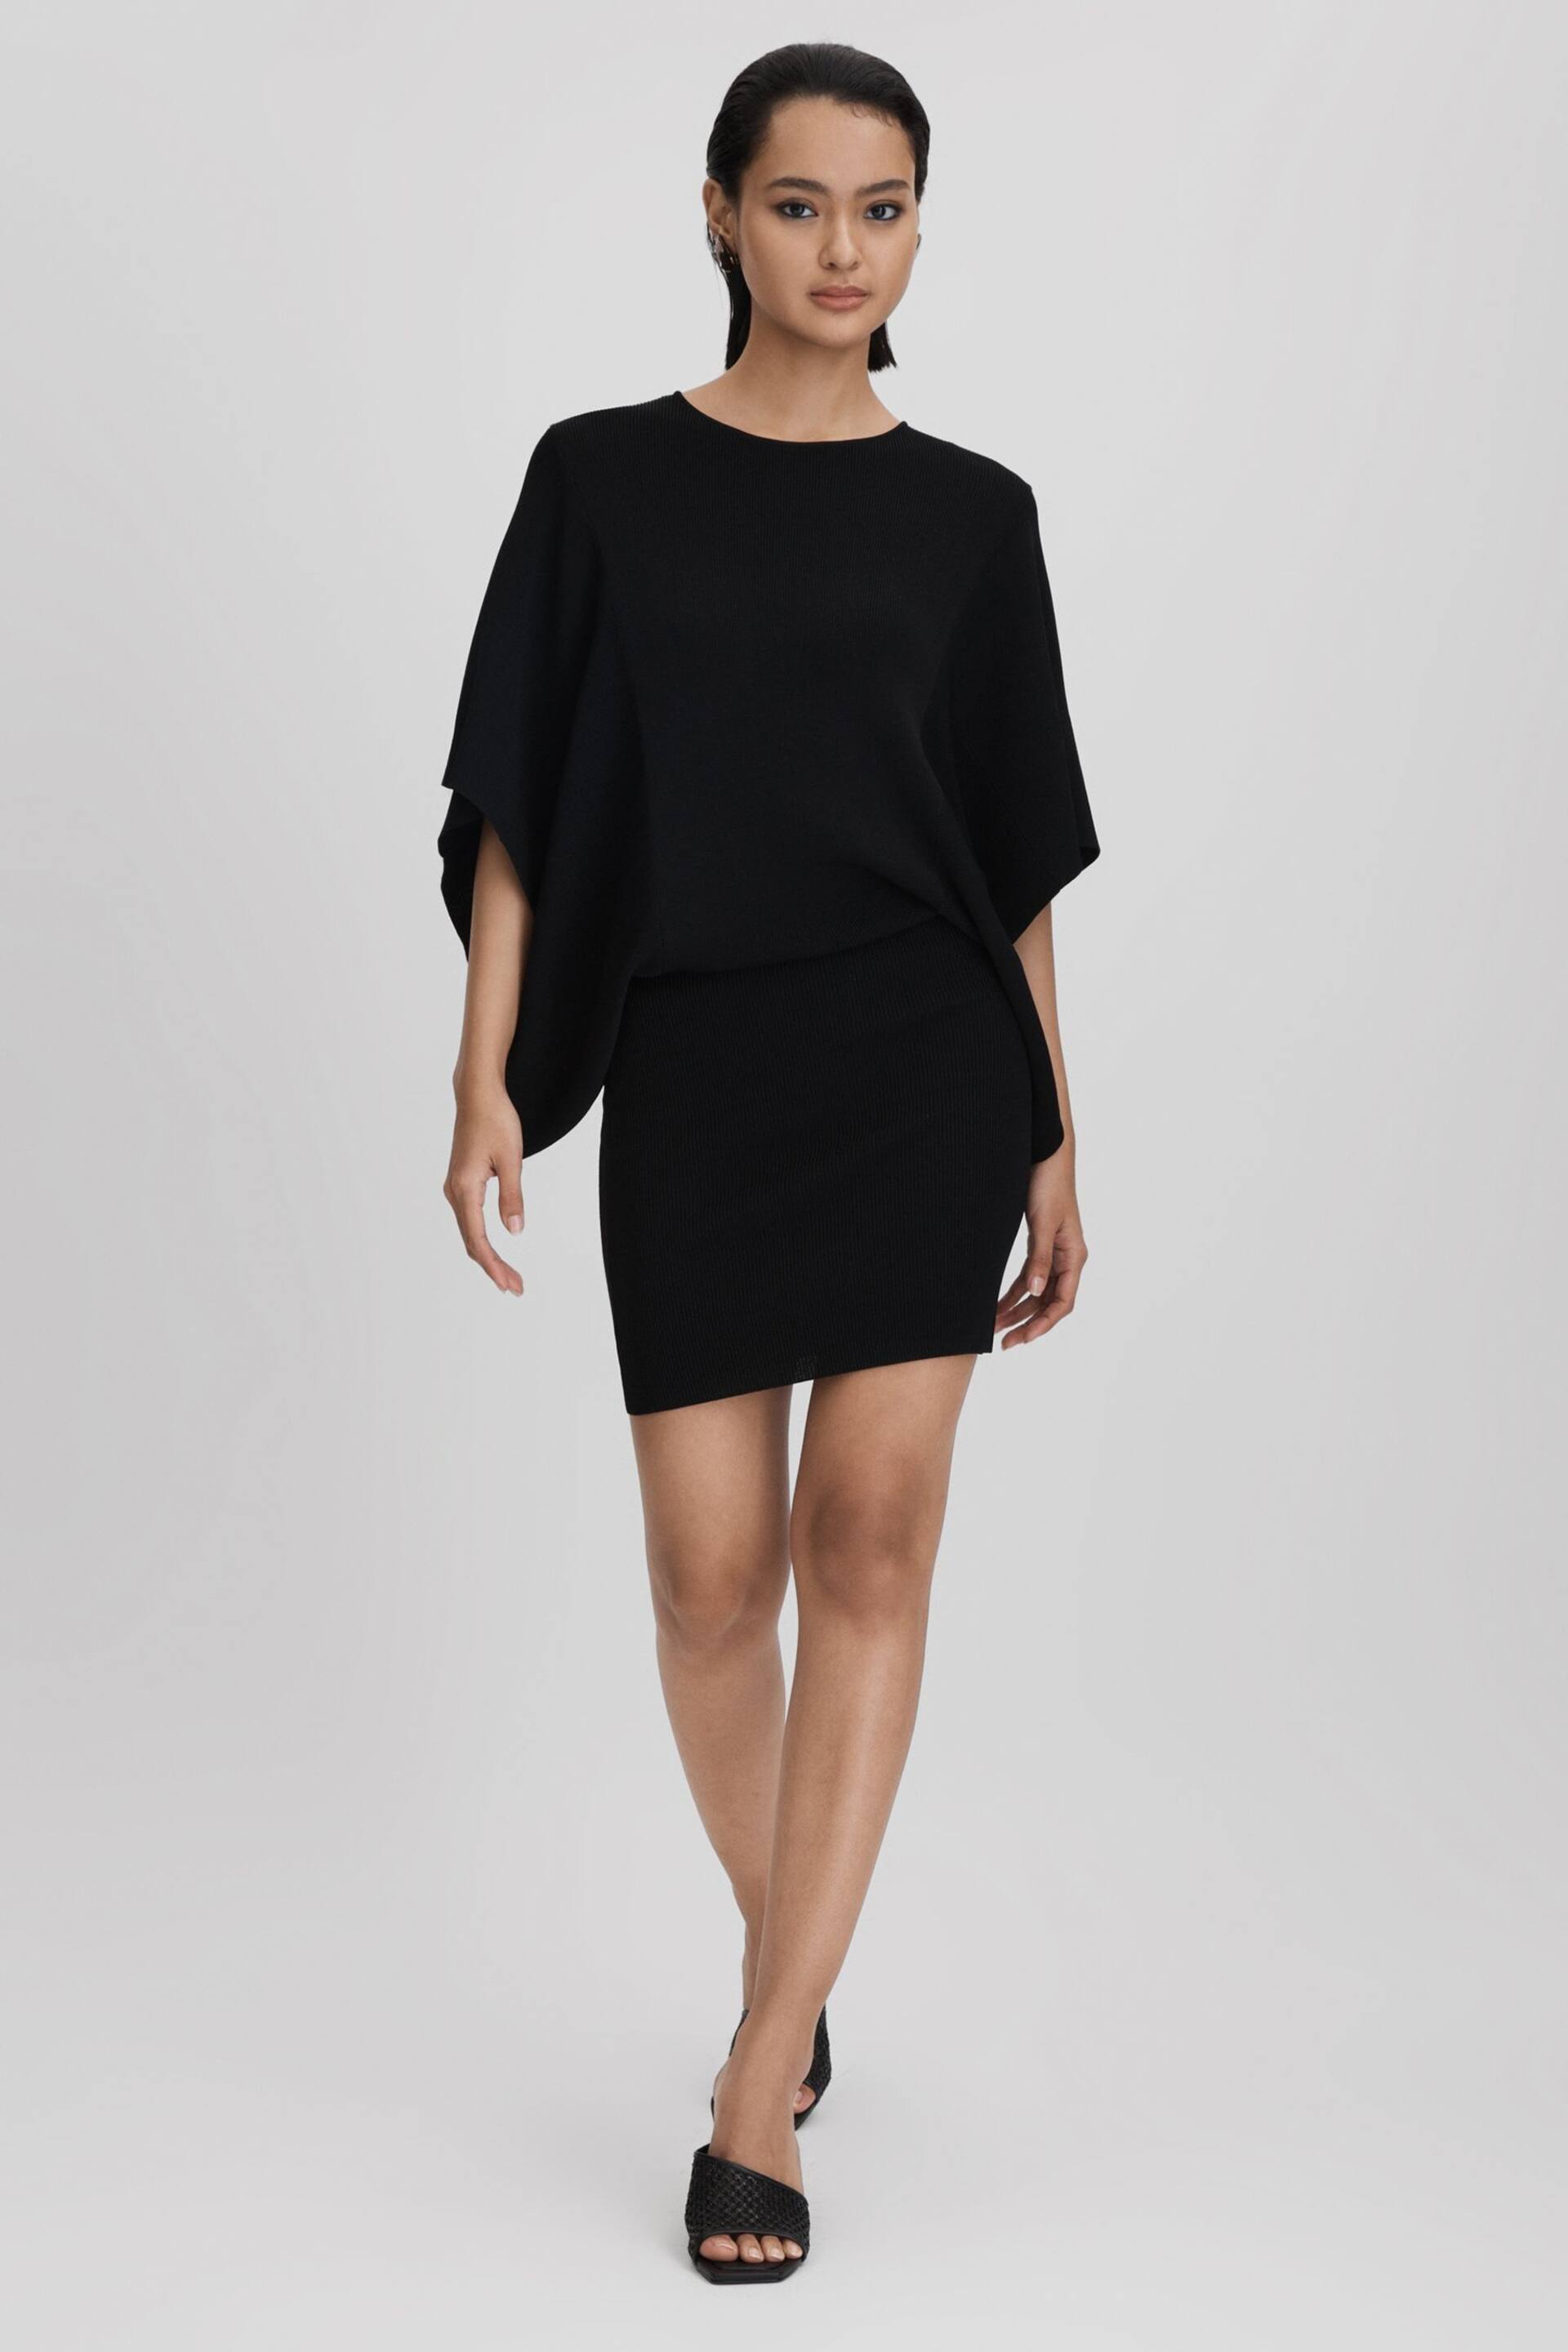 Reiss Black Julia Knitted Cape Sleeve Mini Dress - Image 3 of 6